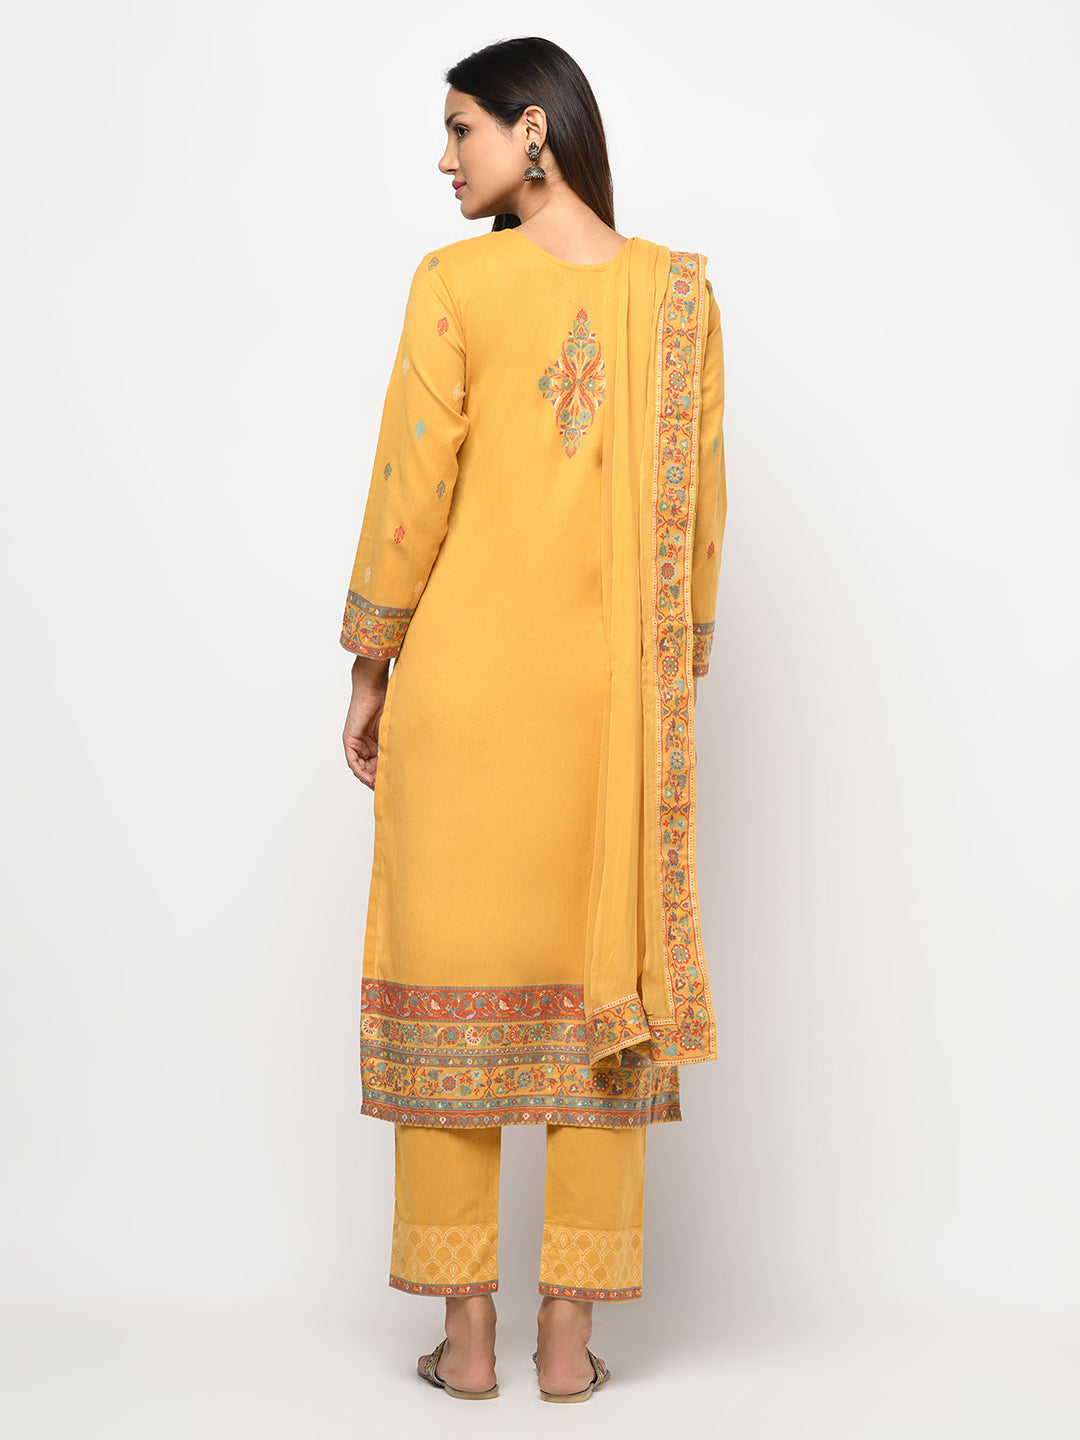 Cotton Kani Woven Yellow Dress Material With 4 Side Patti Dupatta